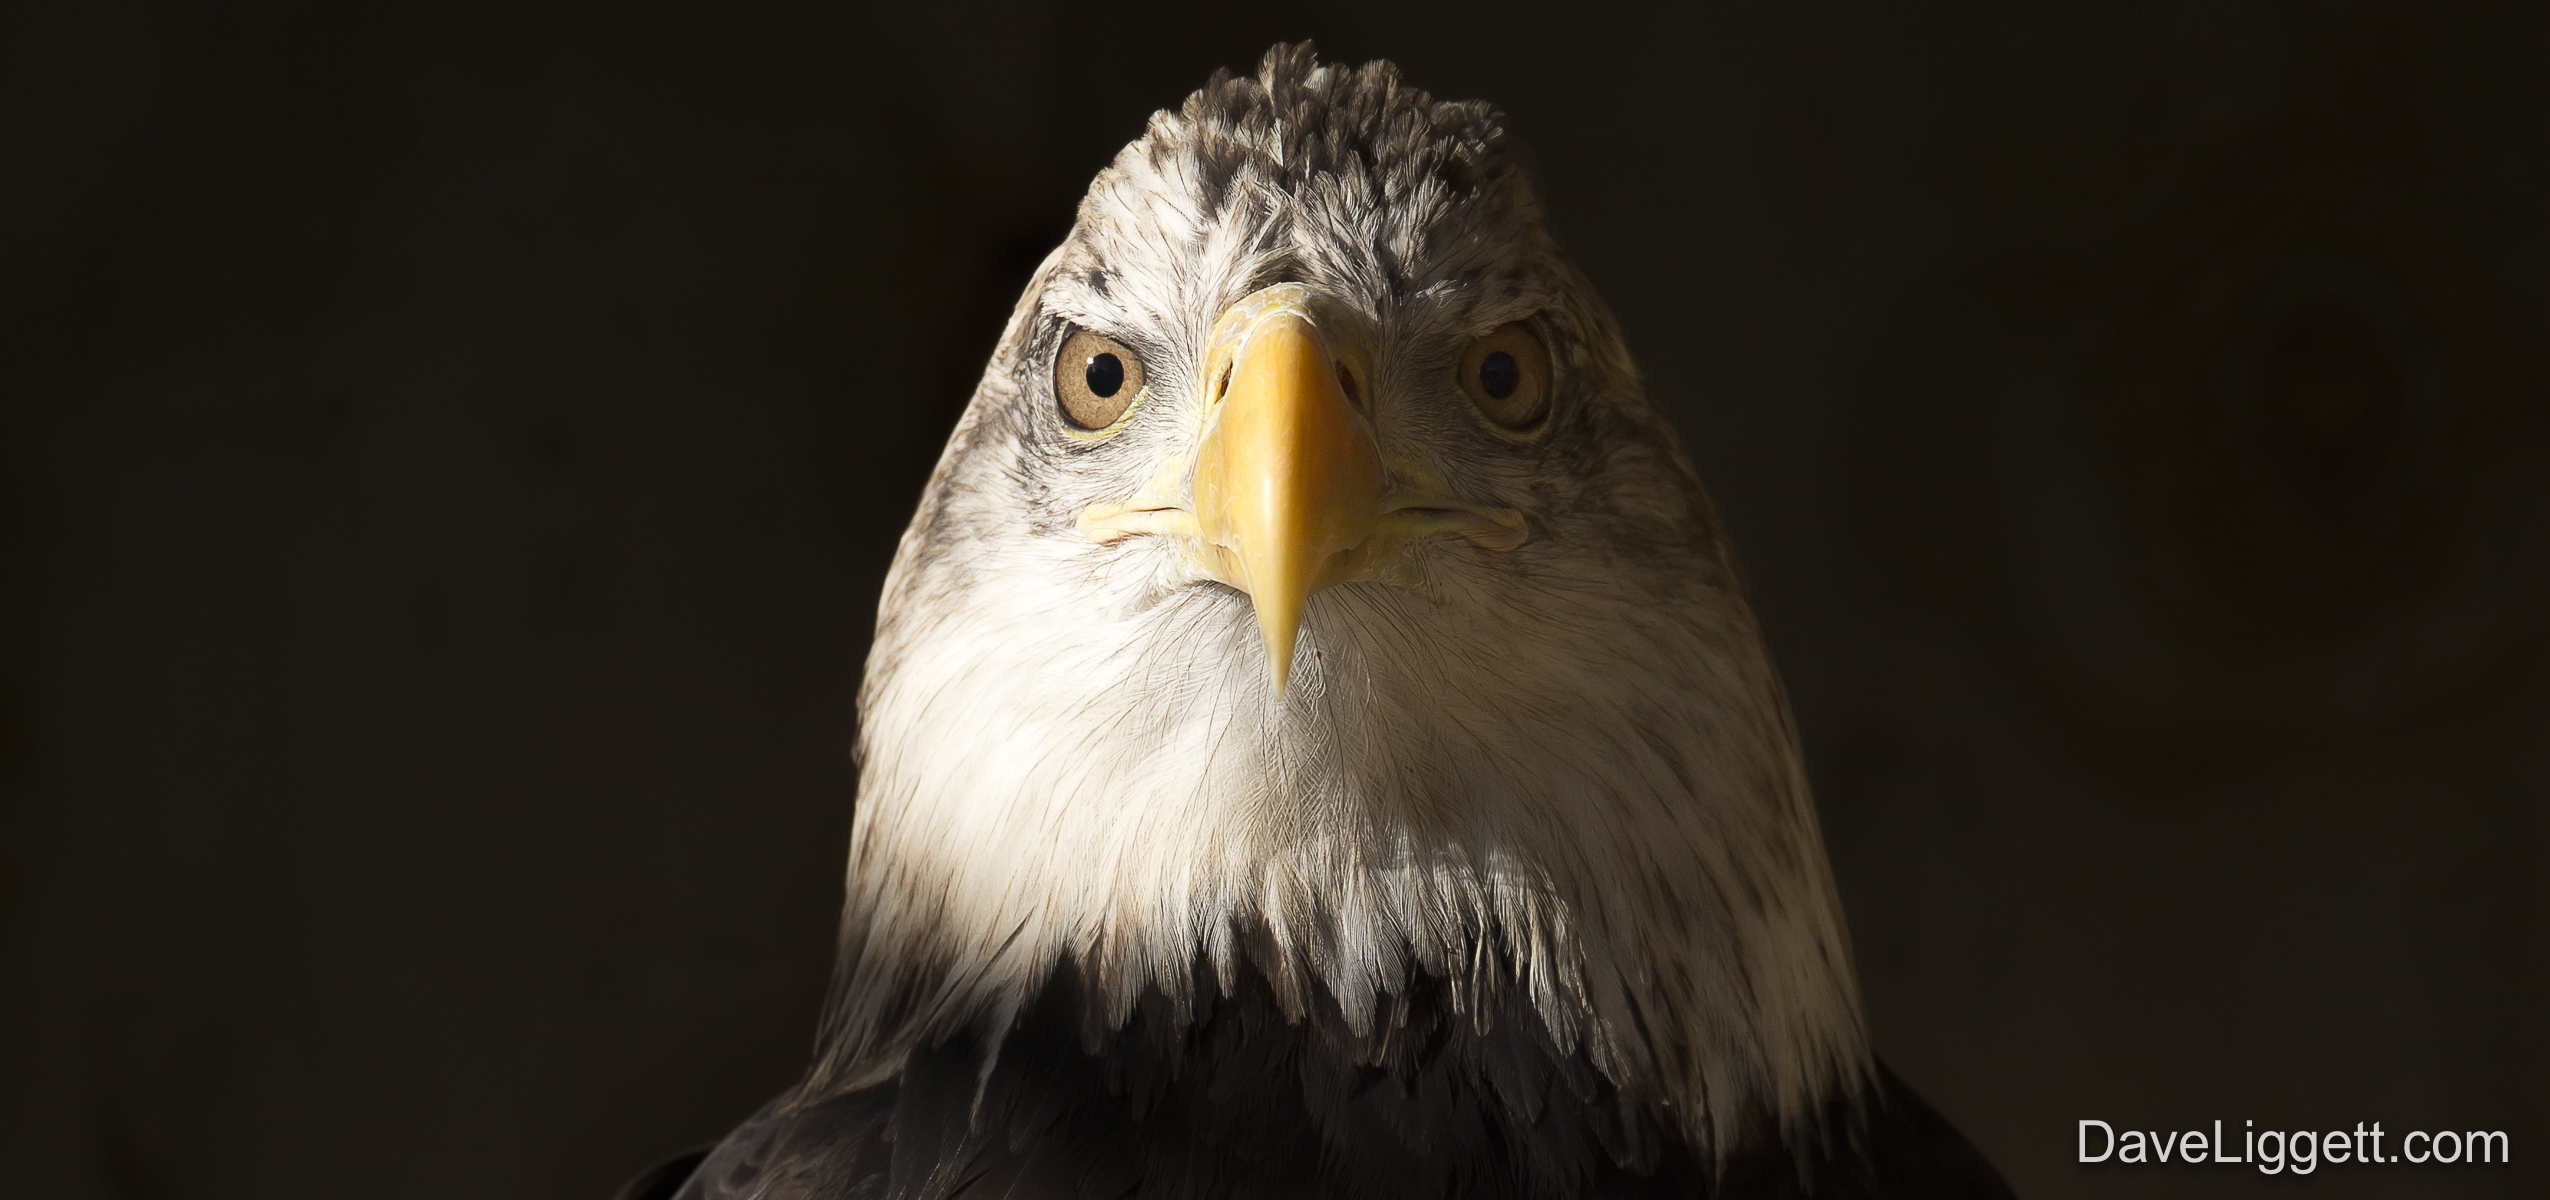 Ohio Wildlife Center Constructs New Bald Eagle Enclosure - Ohio ...